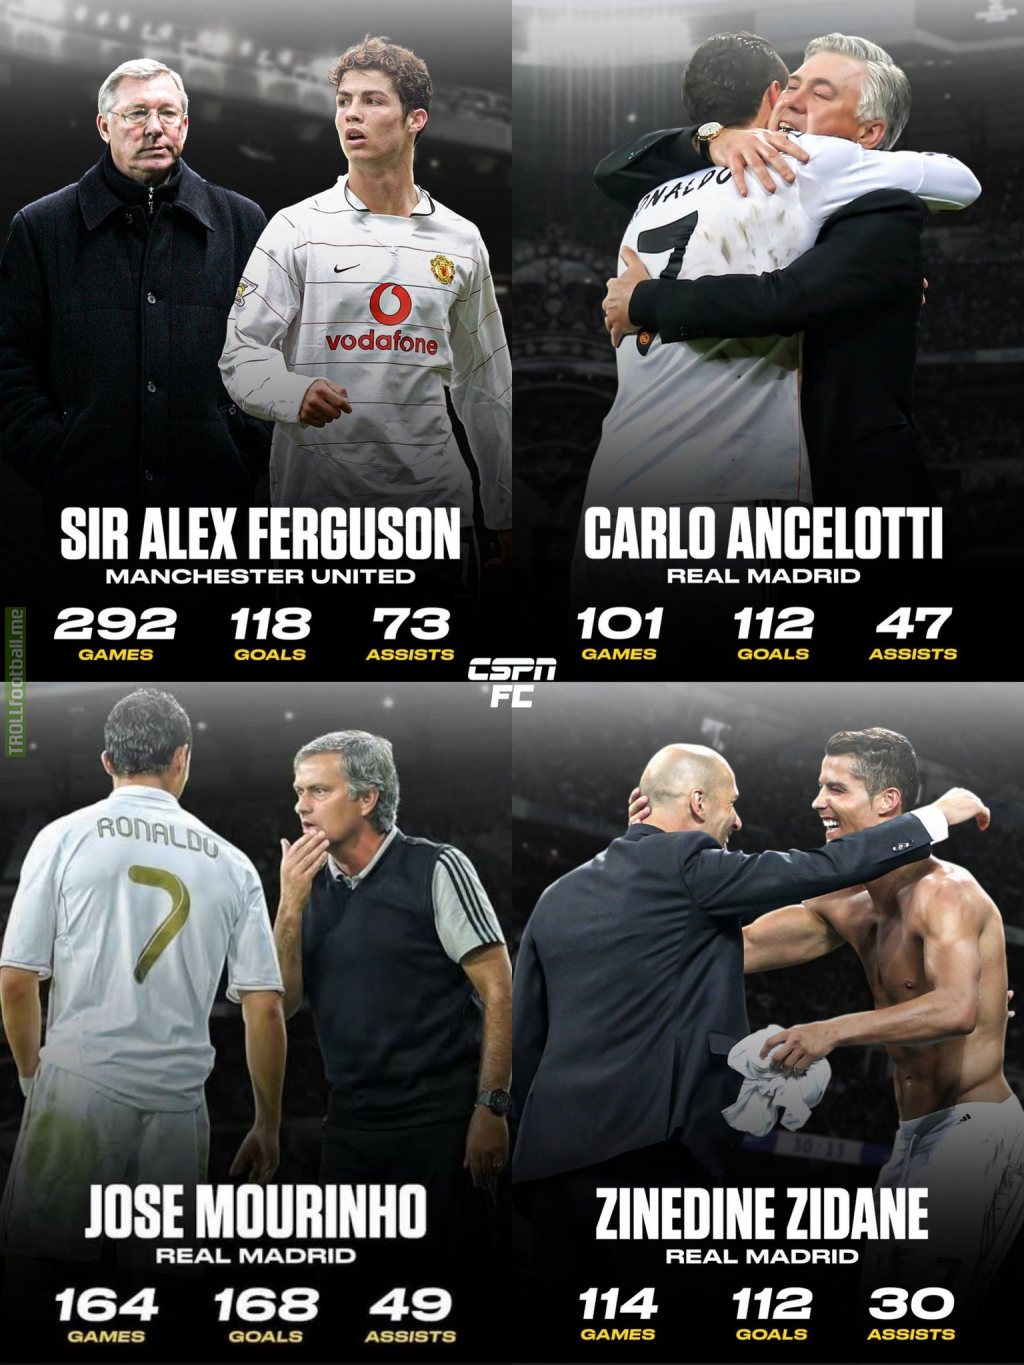 Cristiano Ronaldo's stats under Sir Alex Ferguson, Ancelotti, Mourinho and Zidane.